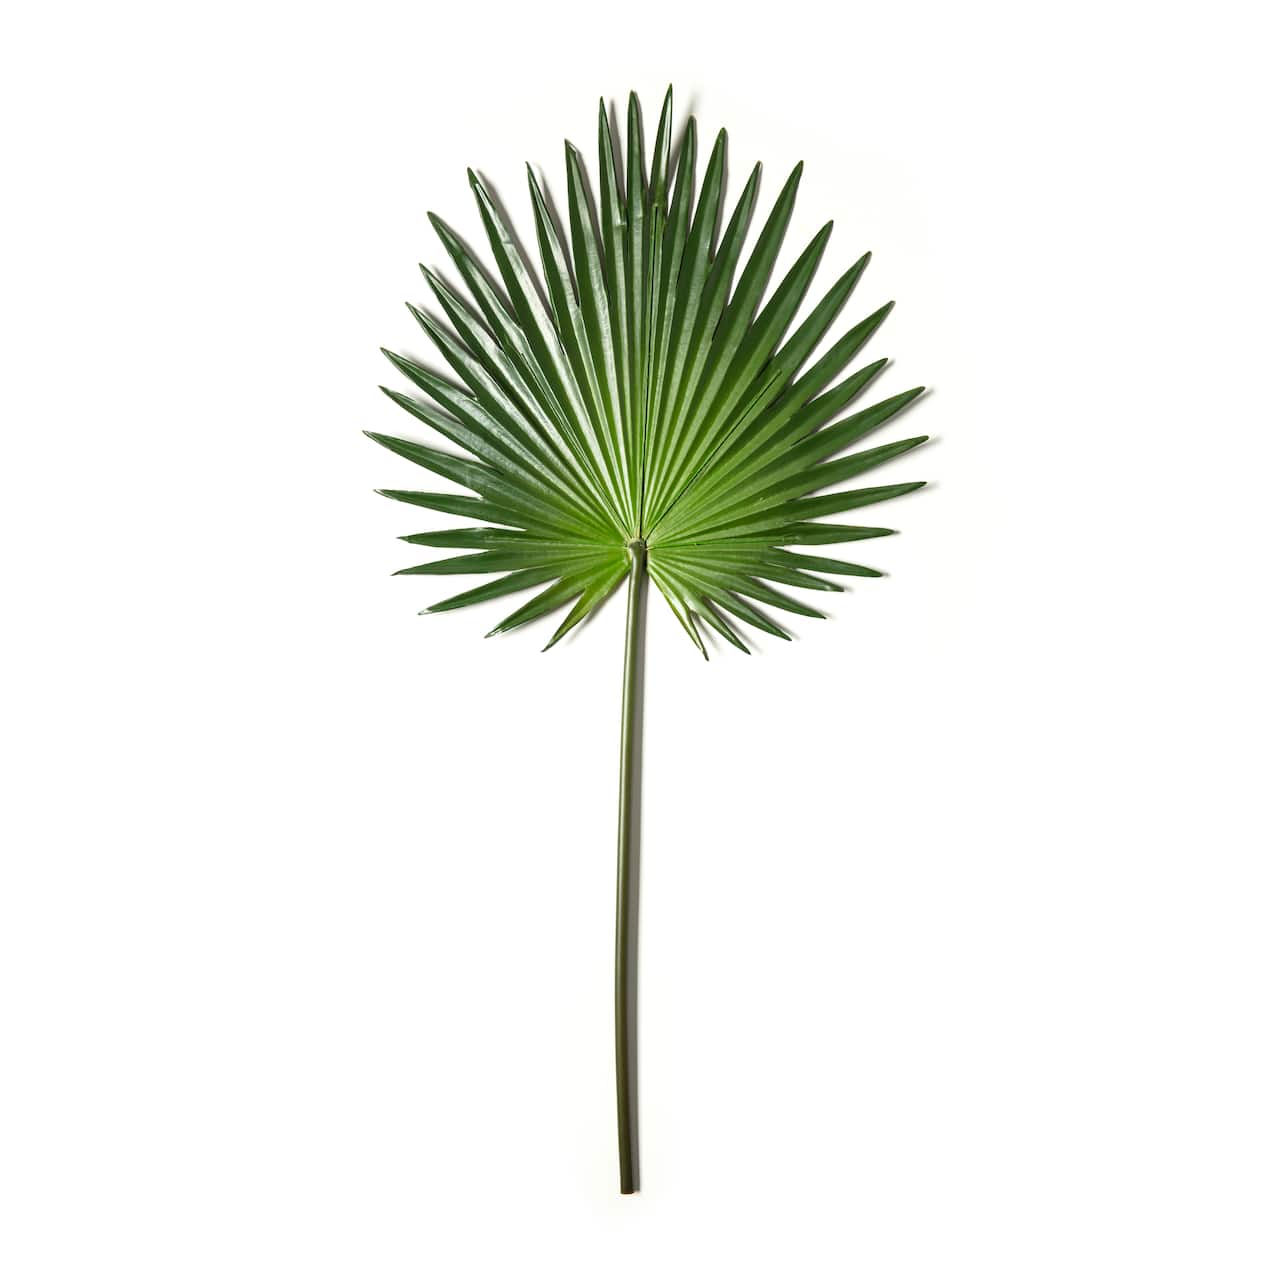 Munk Udelade Oxide Tropical Fan Palm Stem by Ashland® | Michaels